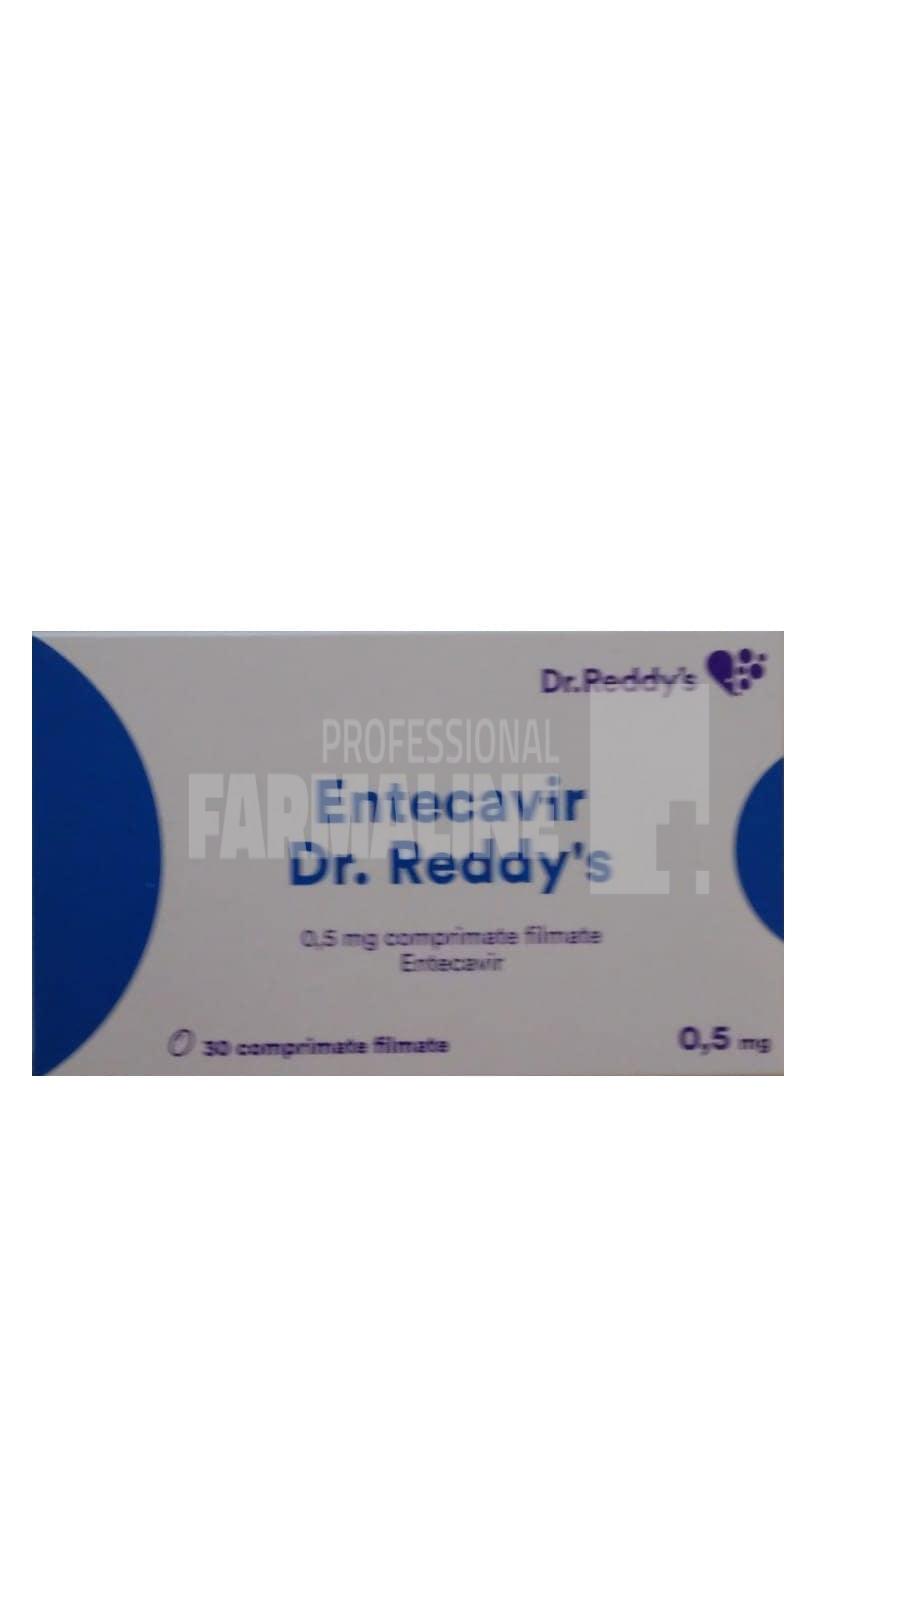 ENTECAVIR DR. REDDY\'S 0,5 mg X 30 COMPR. FILM. 0,5mg DR. REDDY\'S LAB